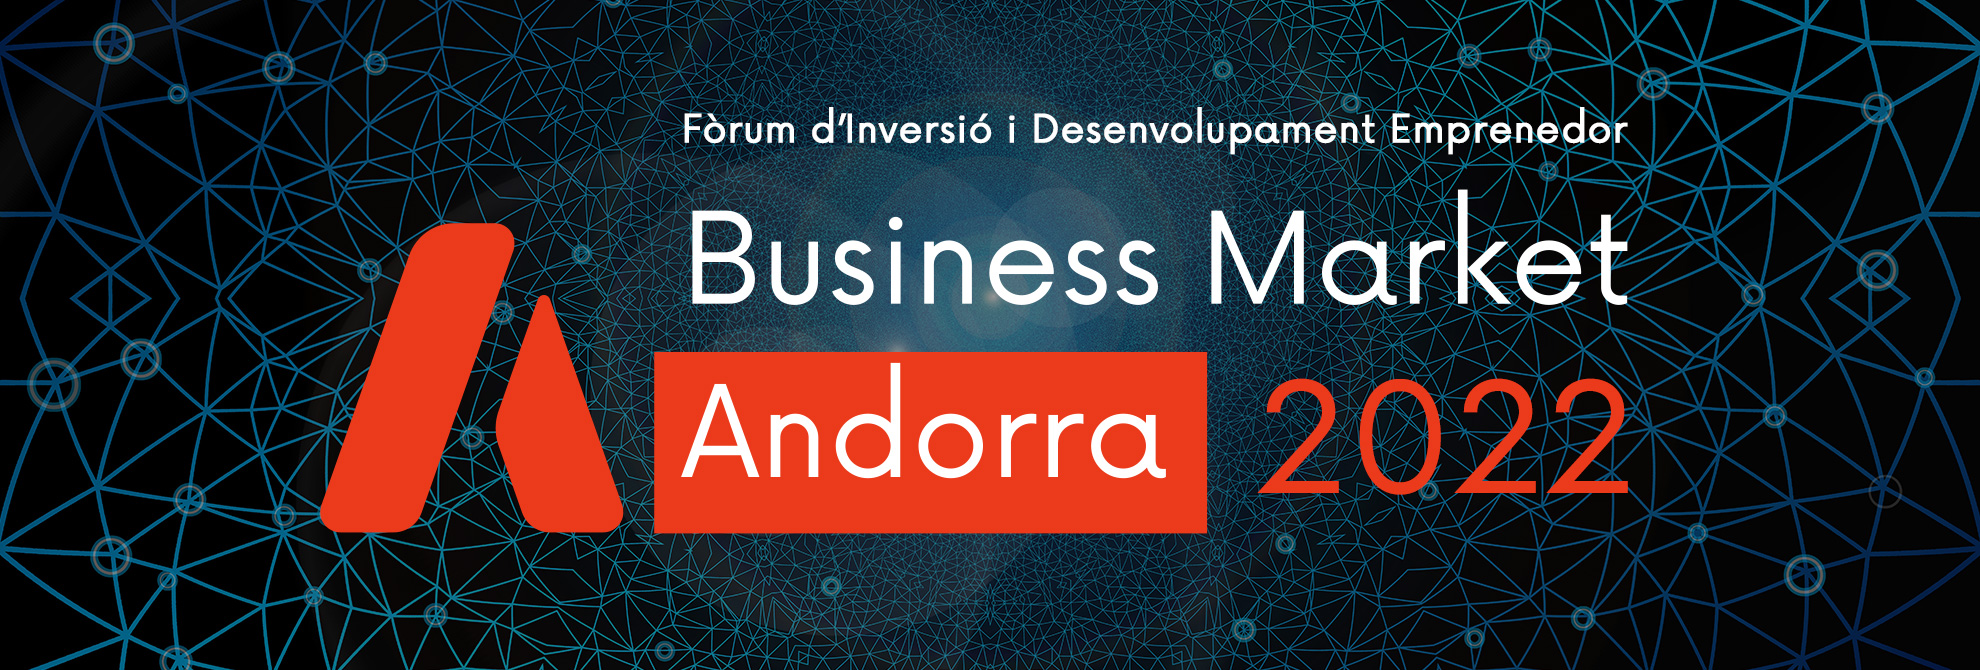 Andorra Business Market 2022 - Event